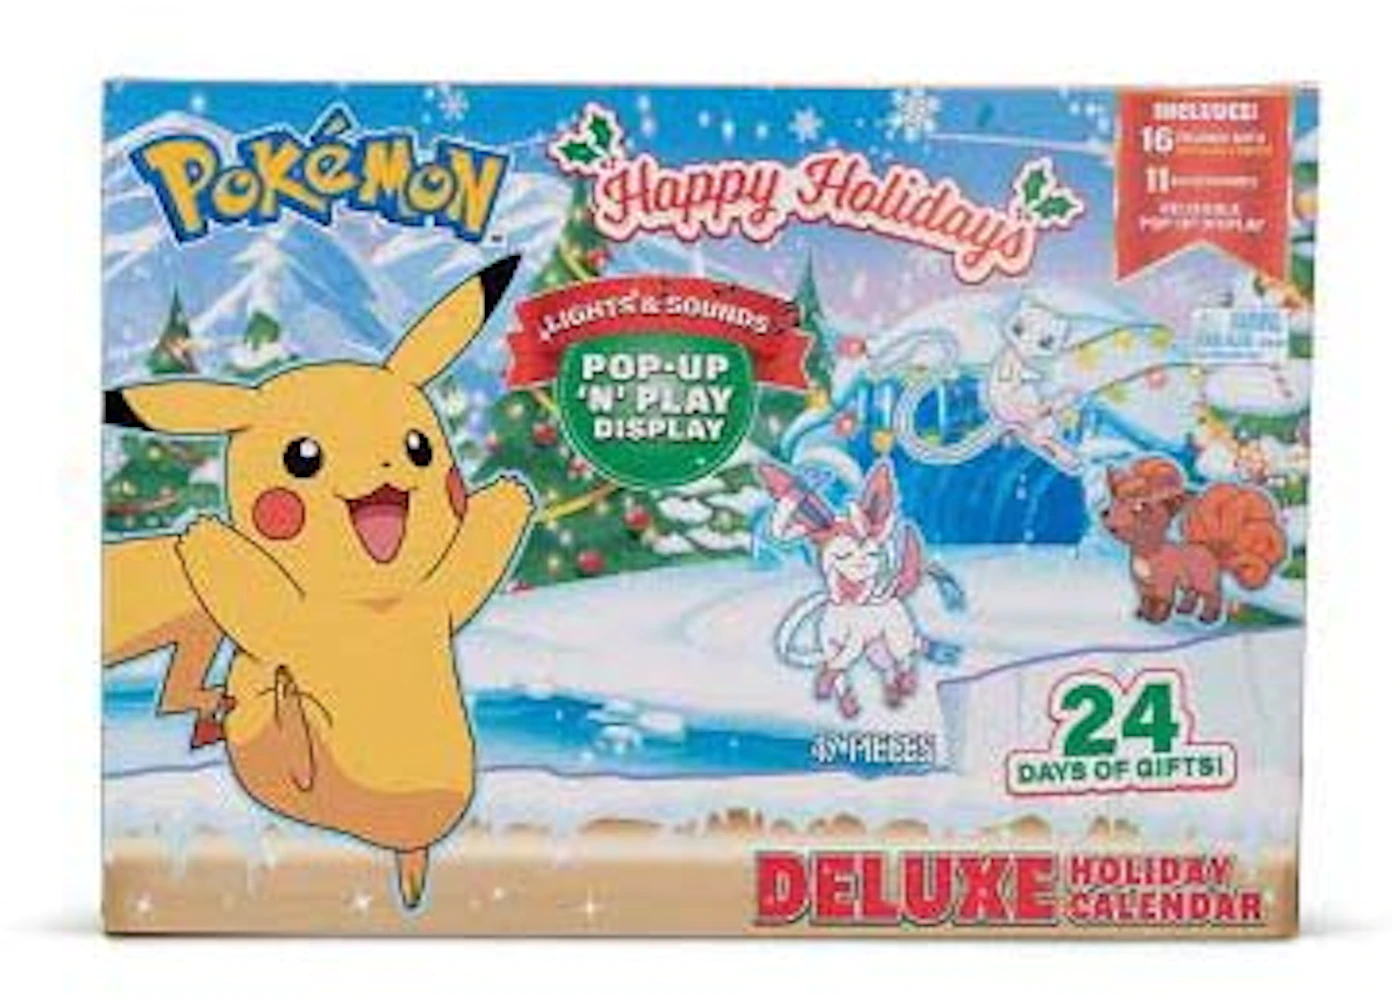 https://images.stockx.com/images/Pokemon-Battle-Figure-Multipack-Deluxe-Holiday-Calendar-2022-Target-Exclusive.jpg?fit=fill&bg=FFFFFF&w=700&h=500&fm=webp&auto=compress&q=90&dpr=2&trim=color&updated_at=1665024332